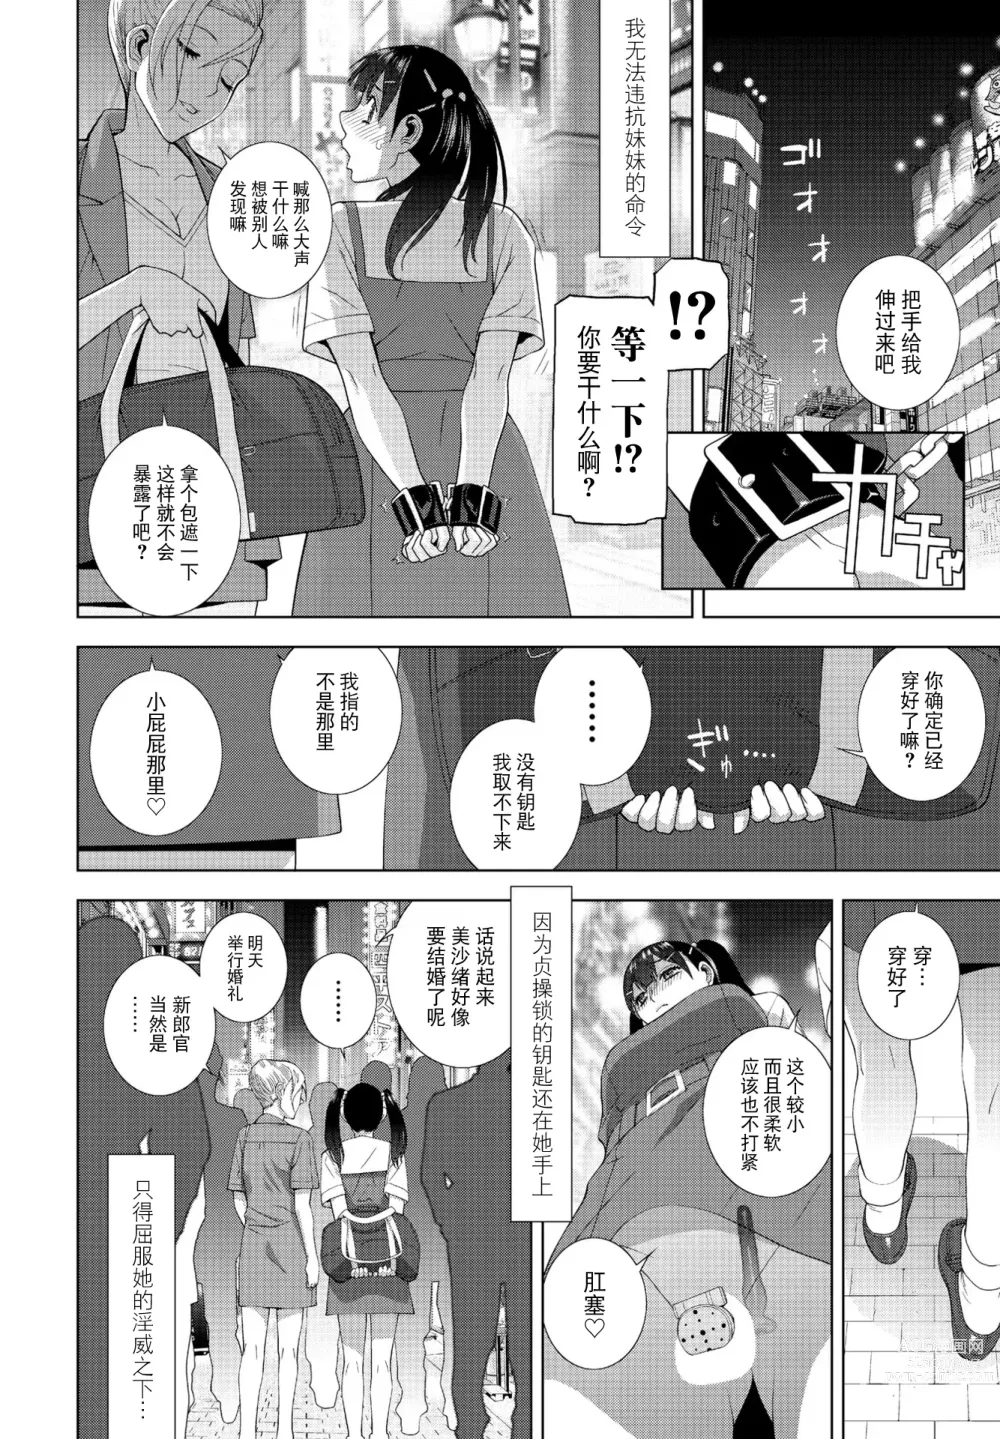 Page 2 of manga Imouto ni Chikau Hi